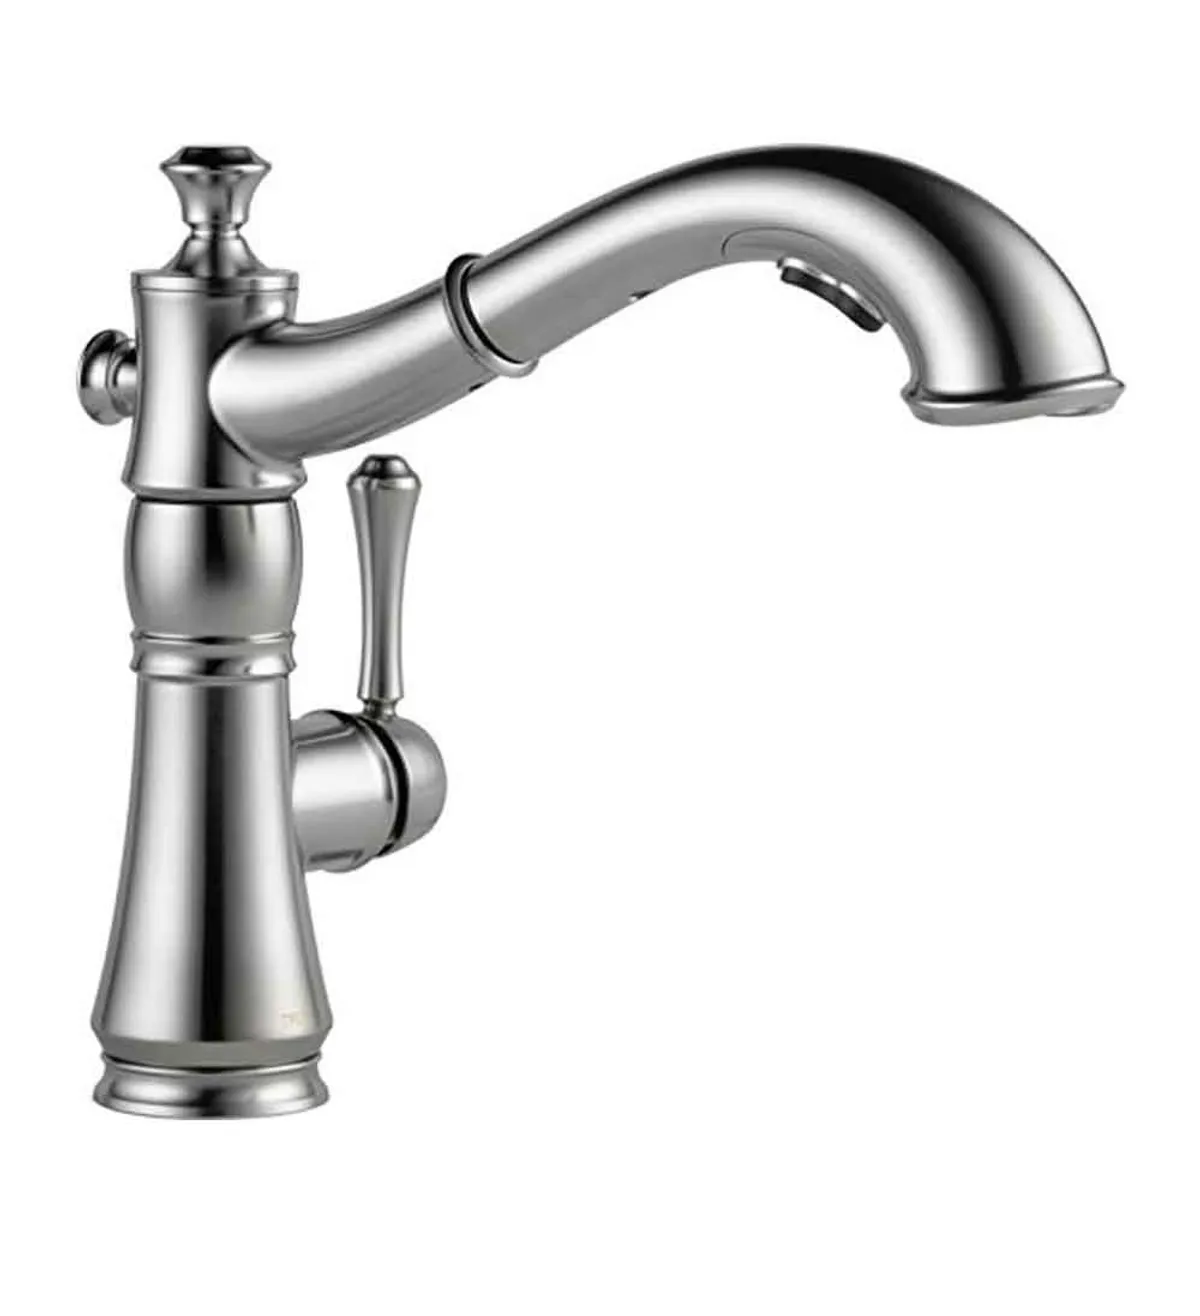 Delta Faucet 4197 AR DST Single Handle Pull Out Kitchen Faucet Review